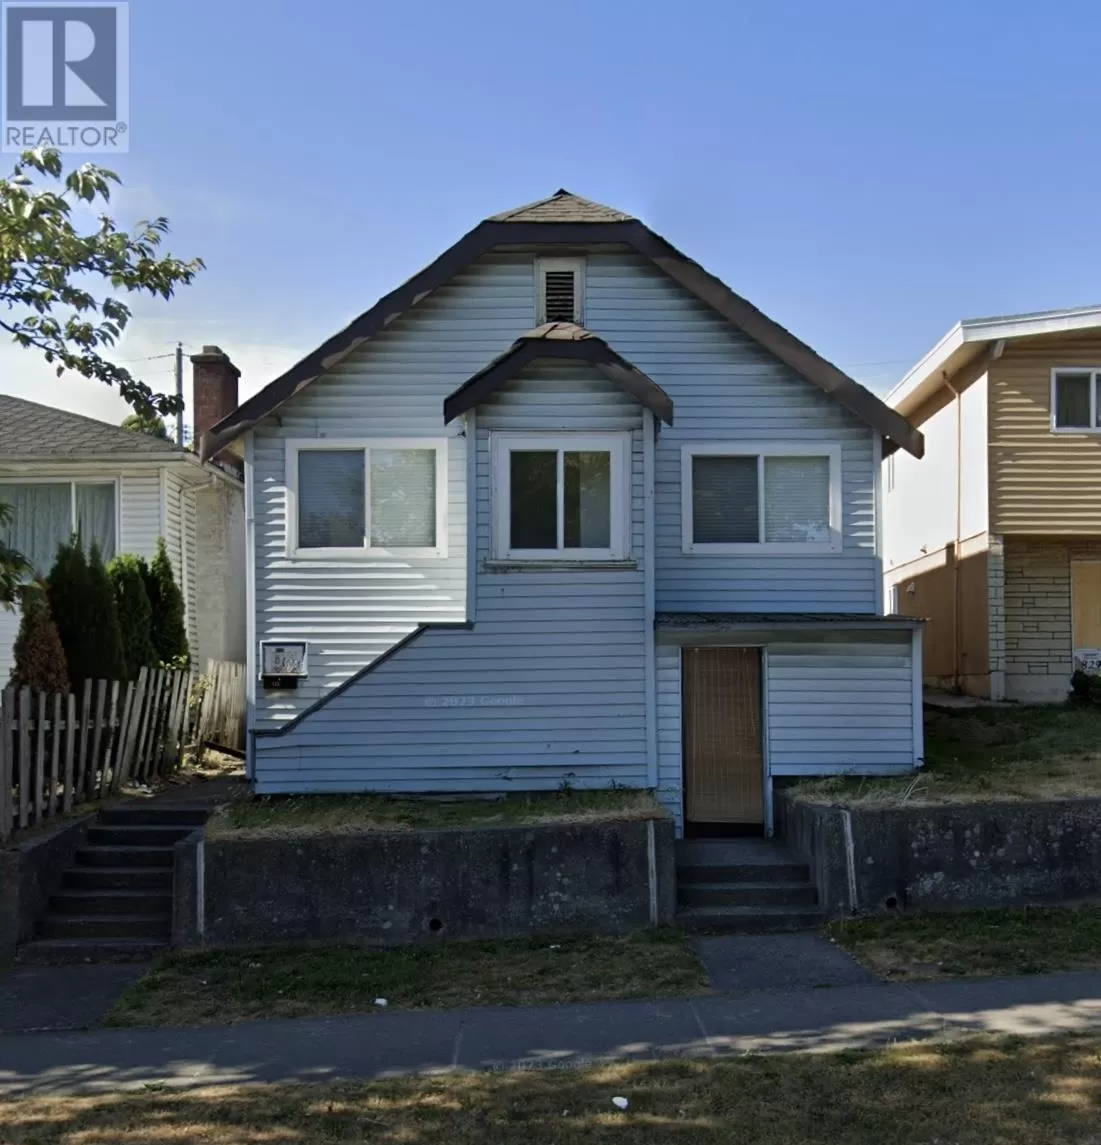 House for rent: 815 Se Marine Drive, Vancouver, British Columbia V5X 2V2